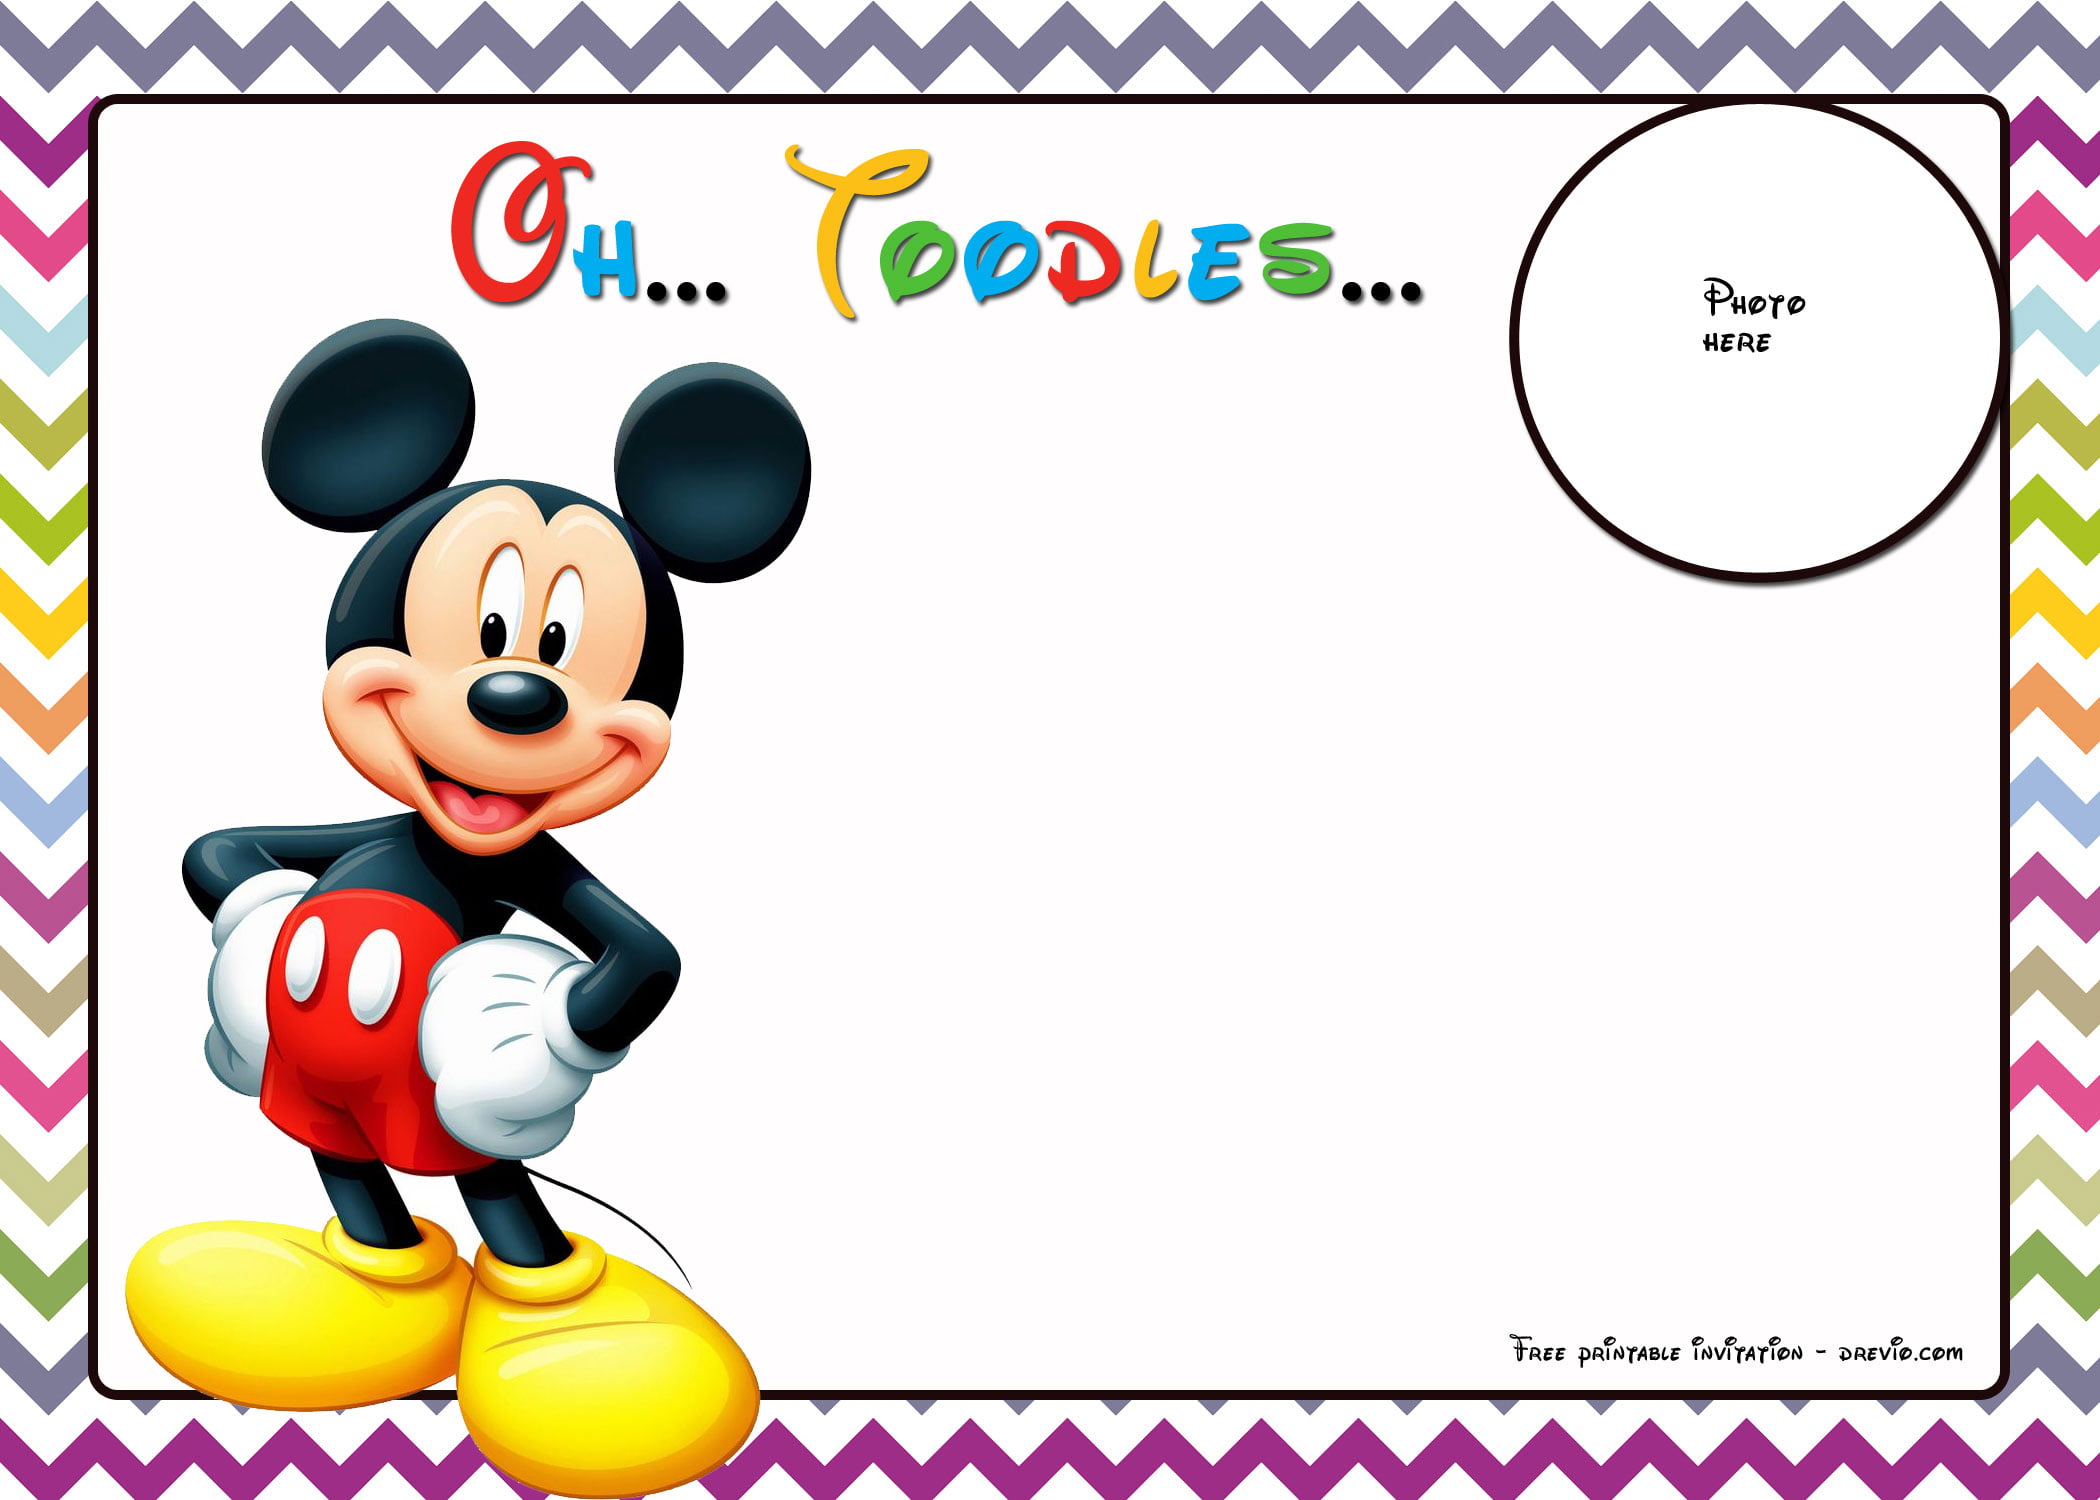 FREE-Printable-Mickey-Mouse-Colorful-Chevron-Birthday-Invitation-Template